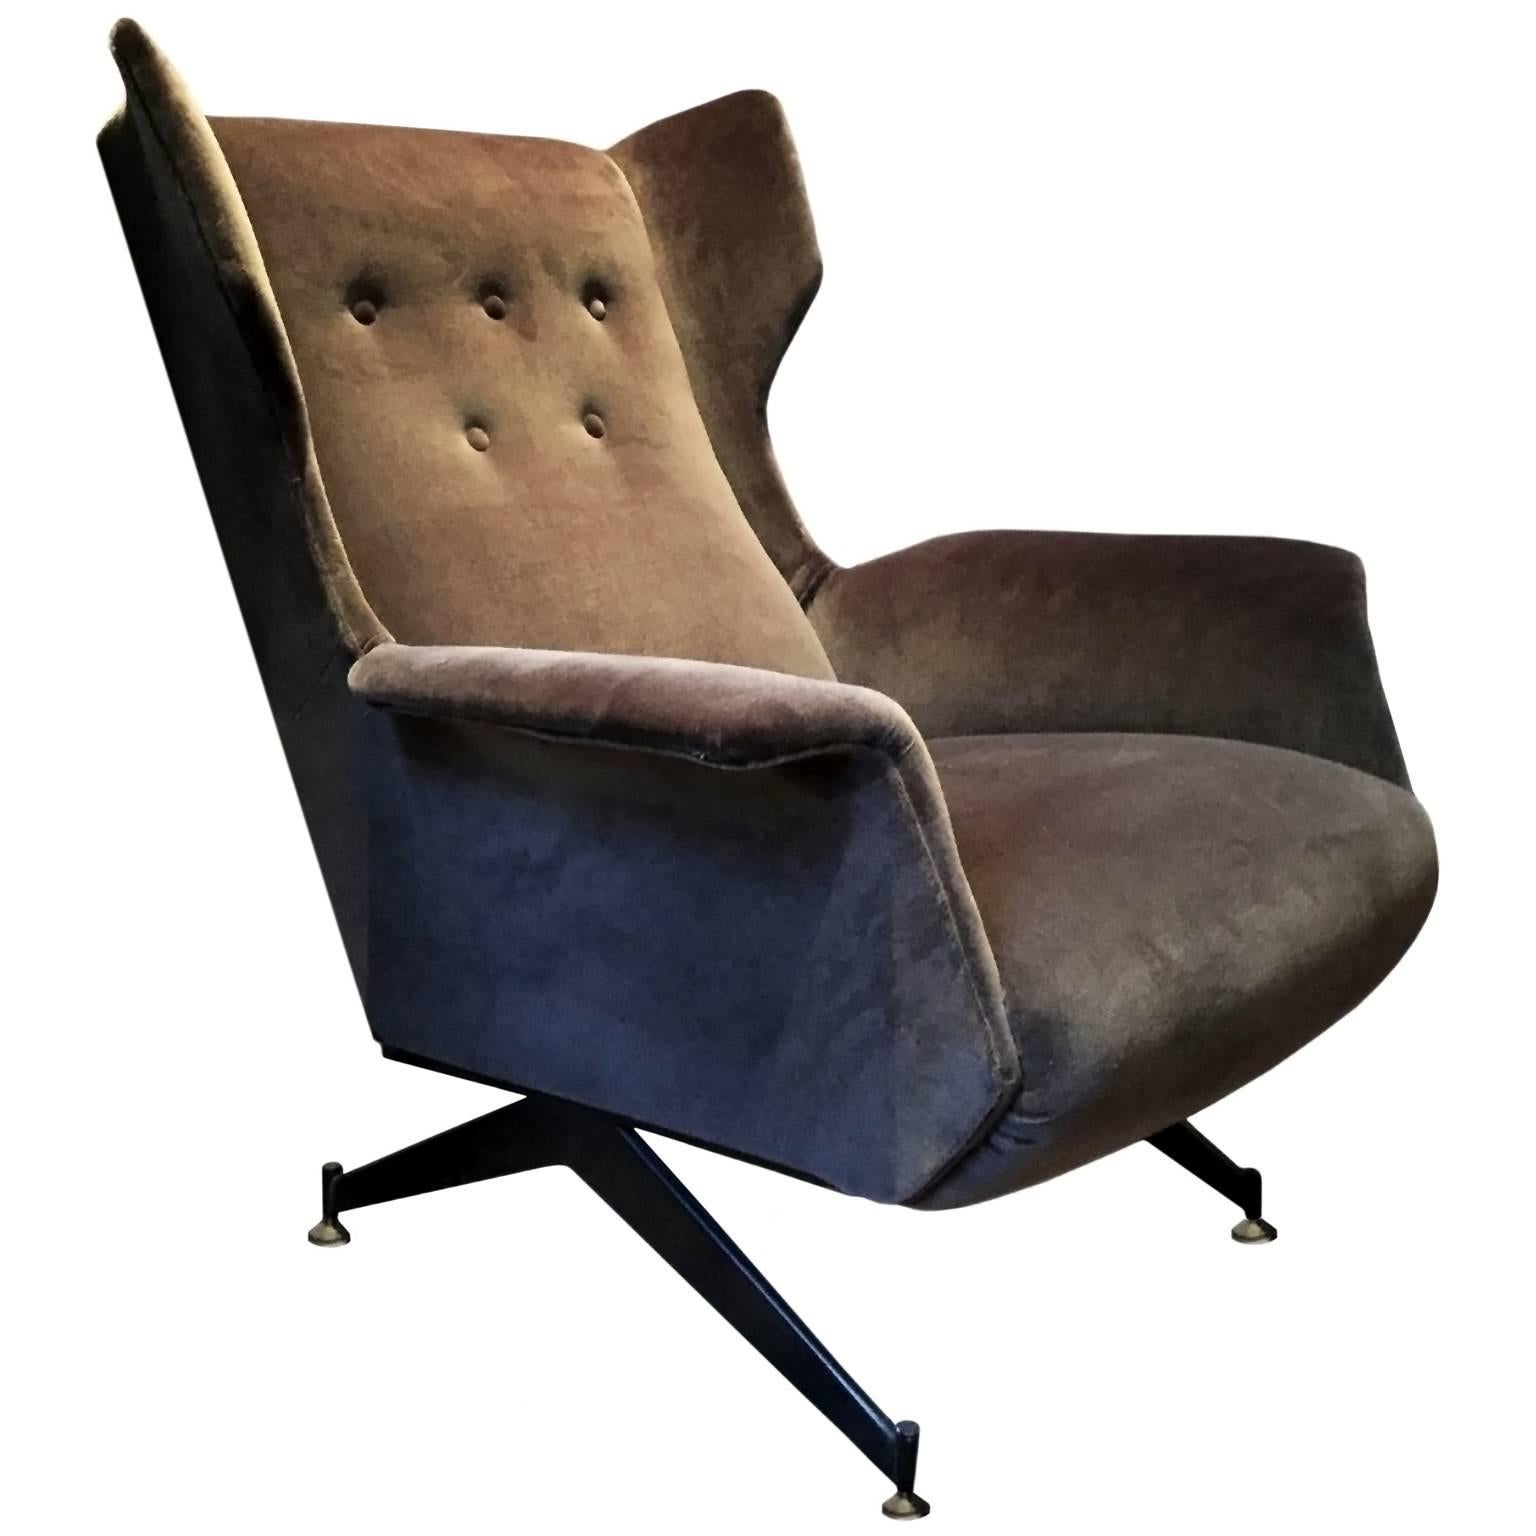 Vintage brown velvet upholstered wingback chair with black metal legs.